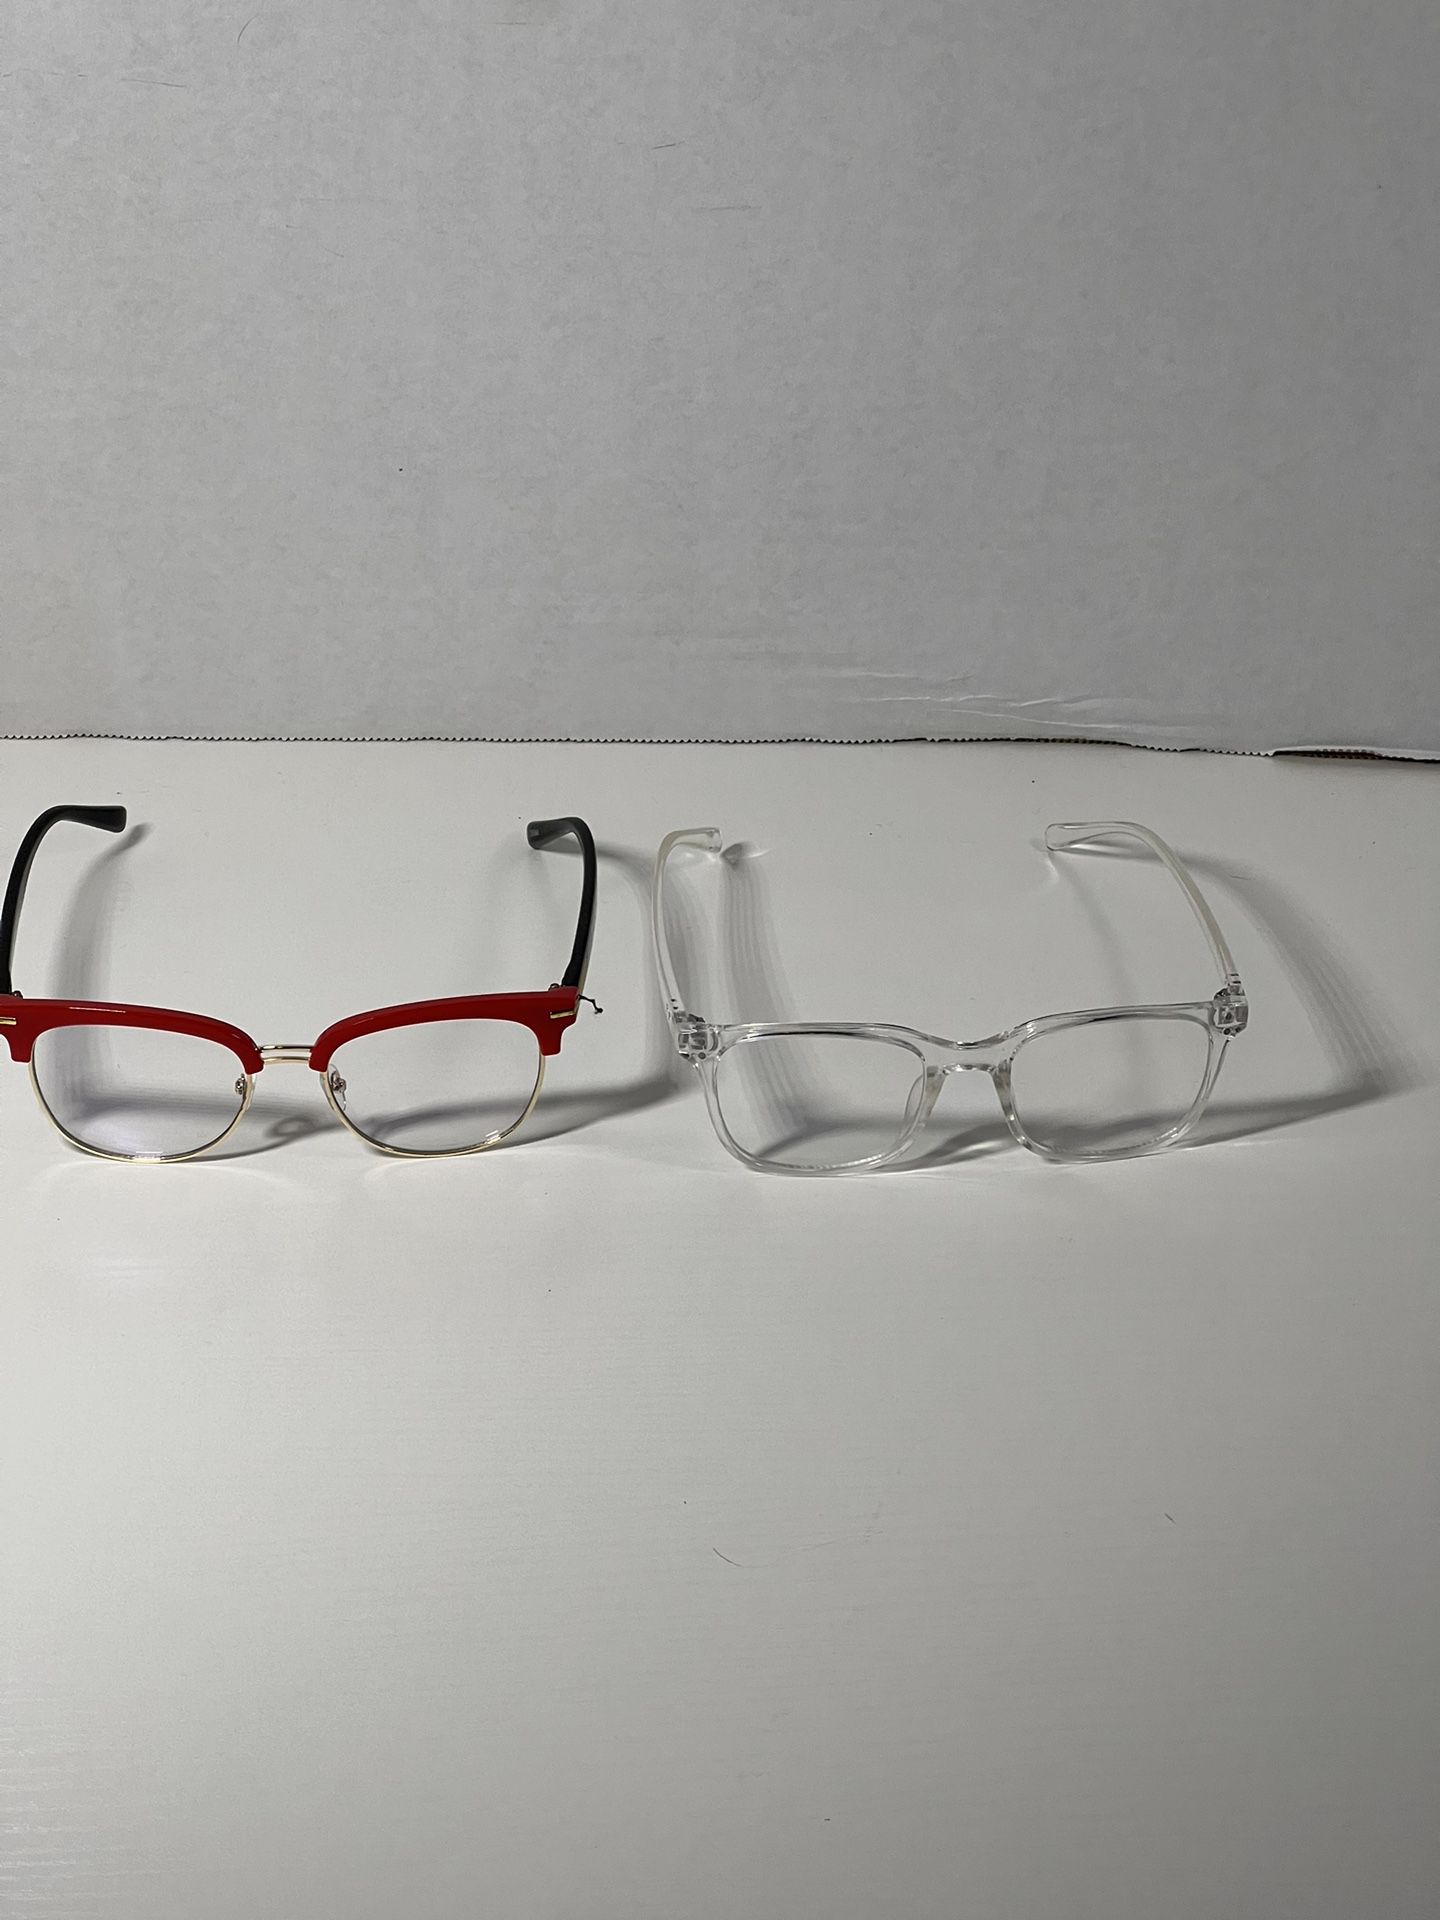 2 Pairs Of Fashion Glasses